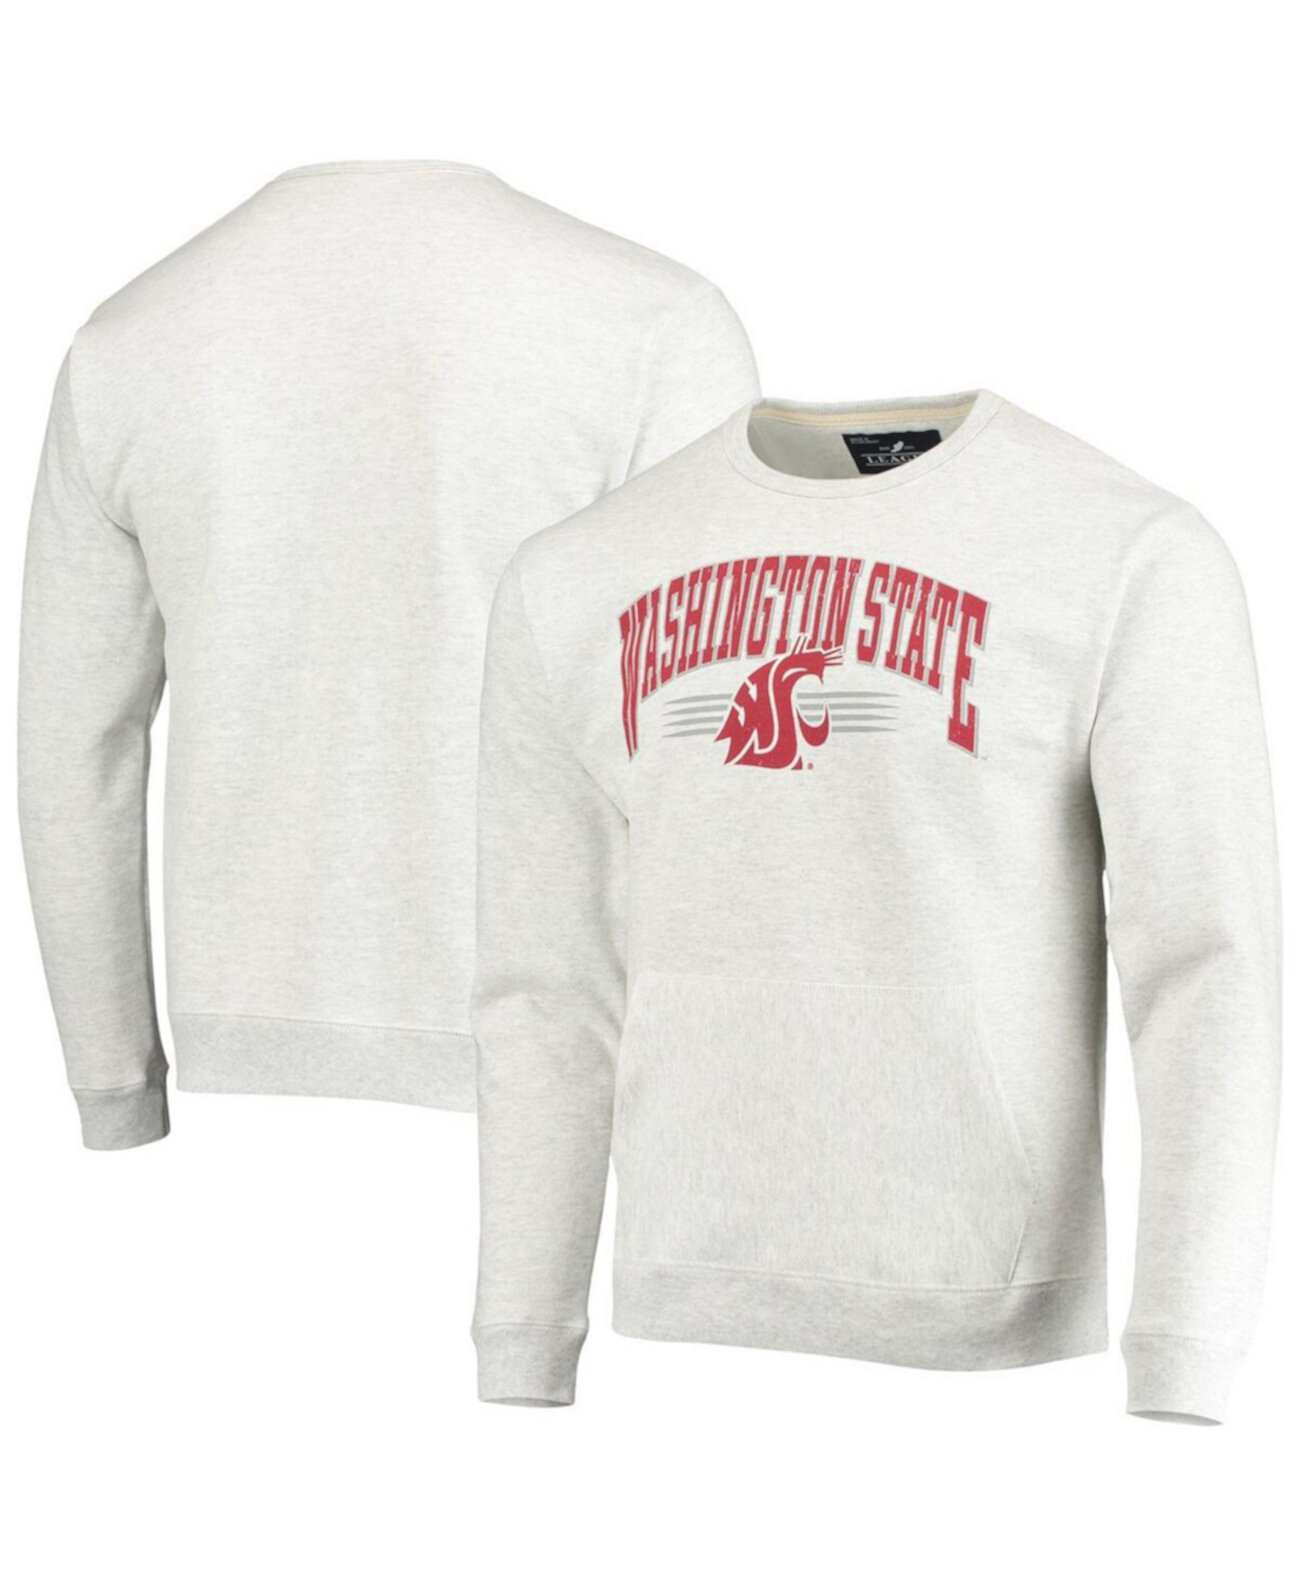 Мужская серая меланжевая толстовка Washington State Cougars с карманом для старшеклассников League Collegiate Wear